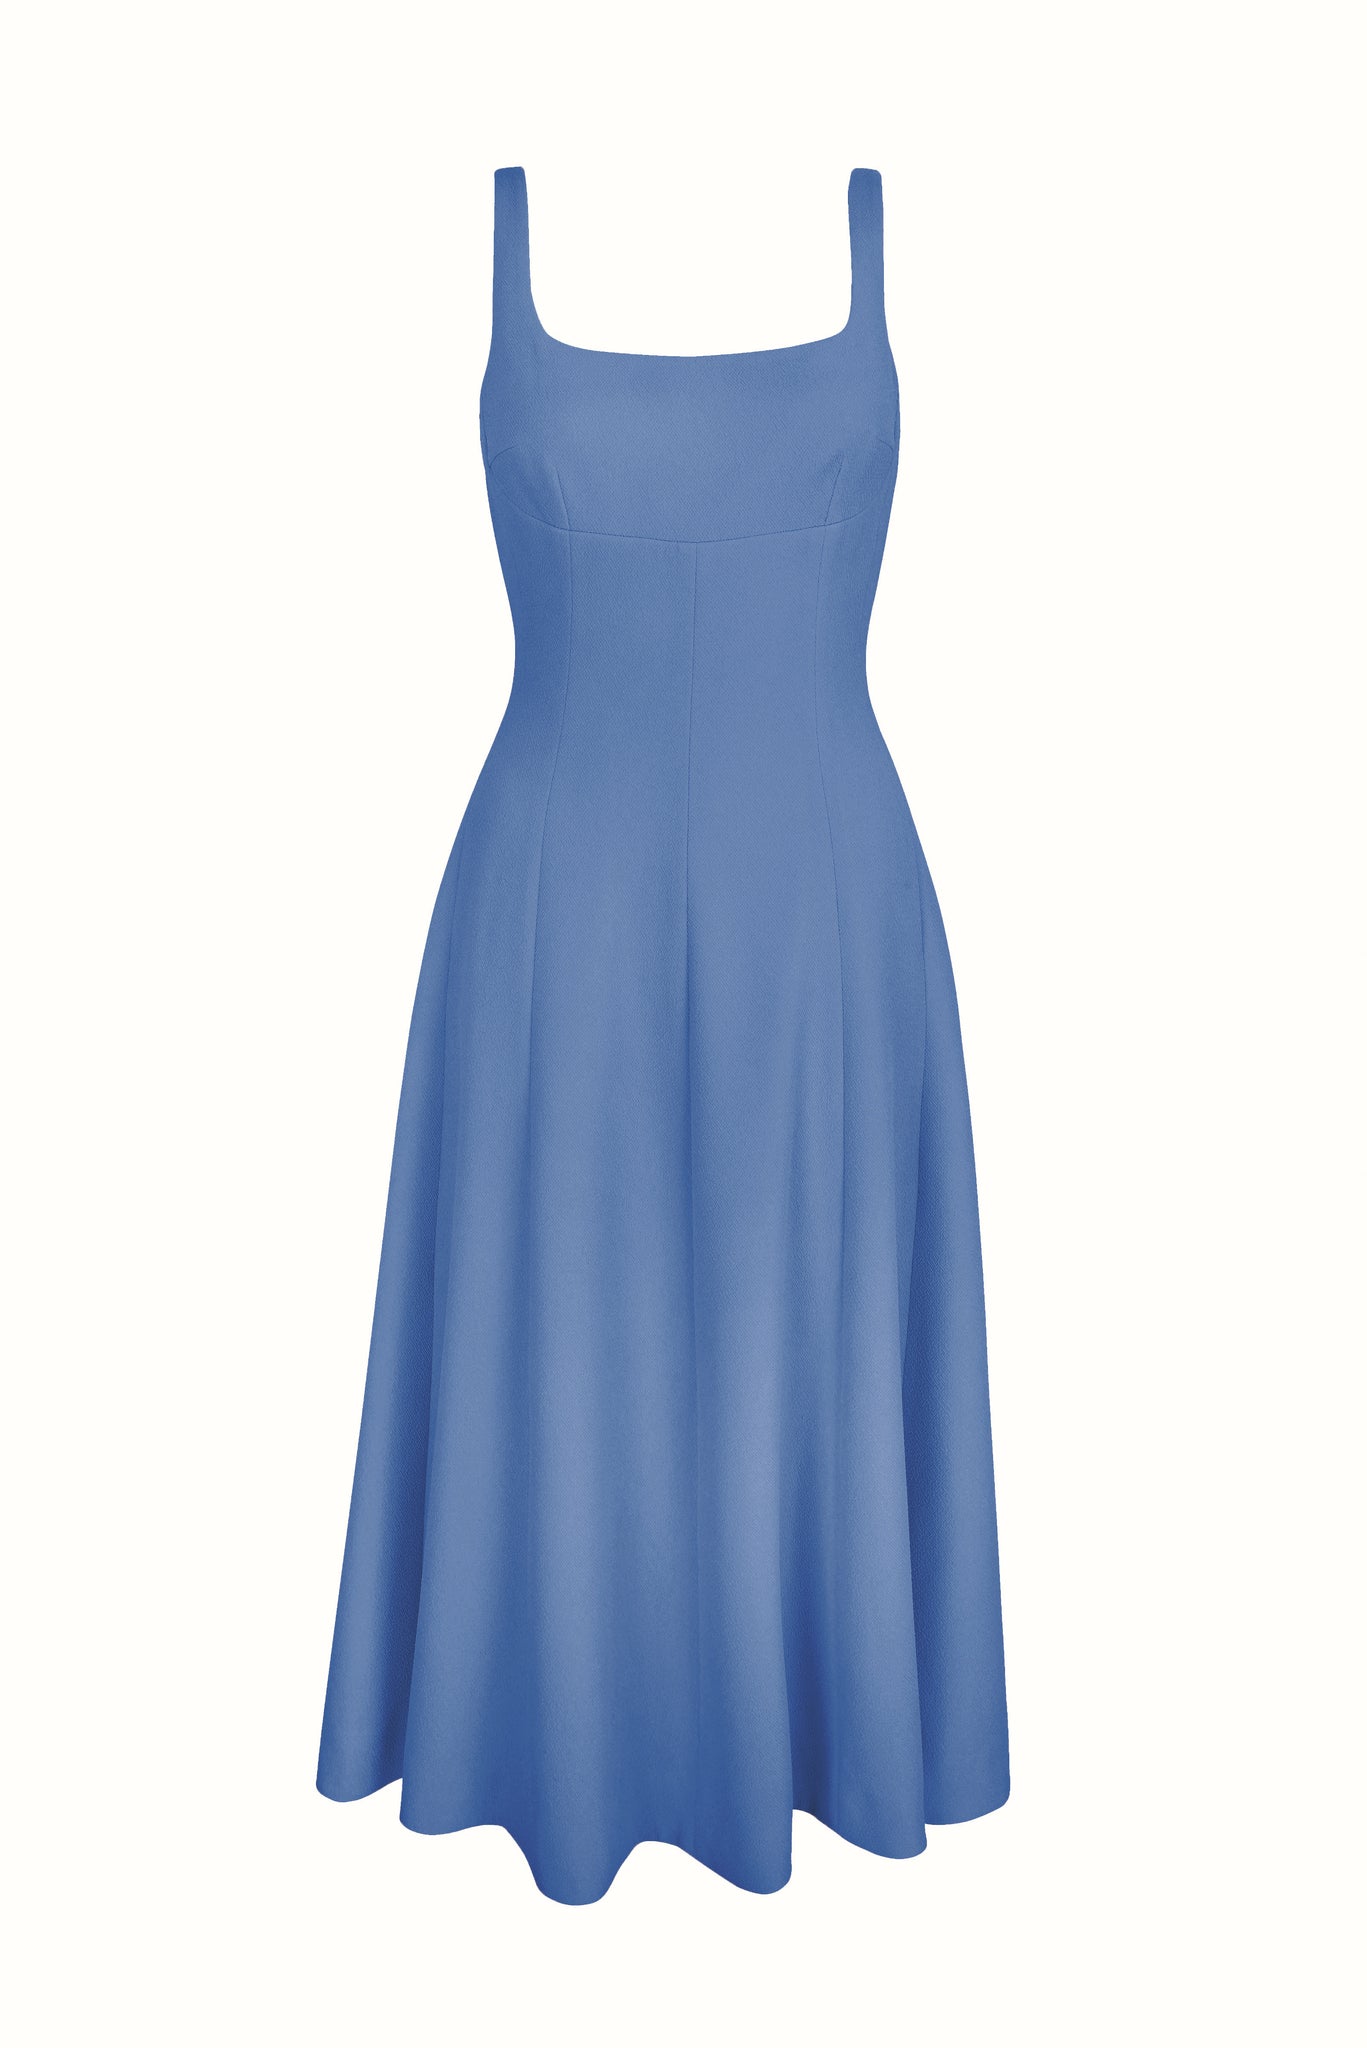 Asia Dress In Indigo Blue Double Crepe | Emilia Wickstead